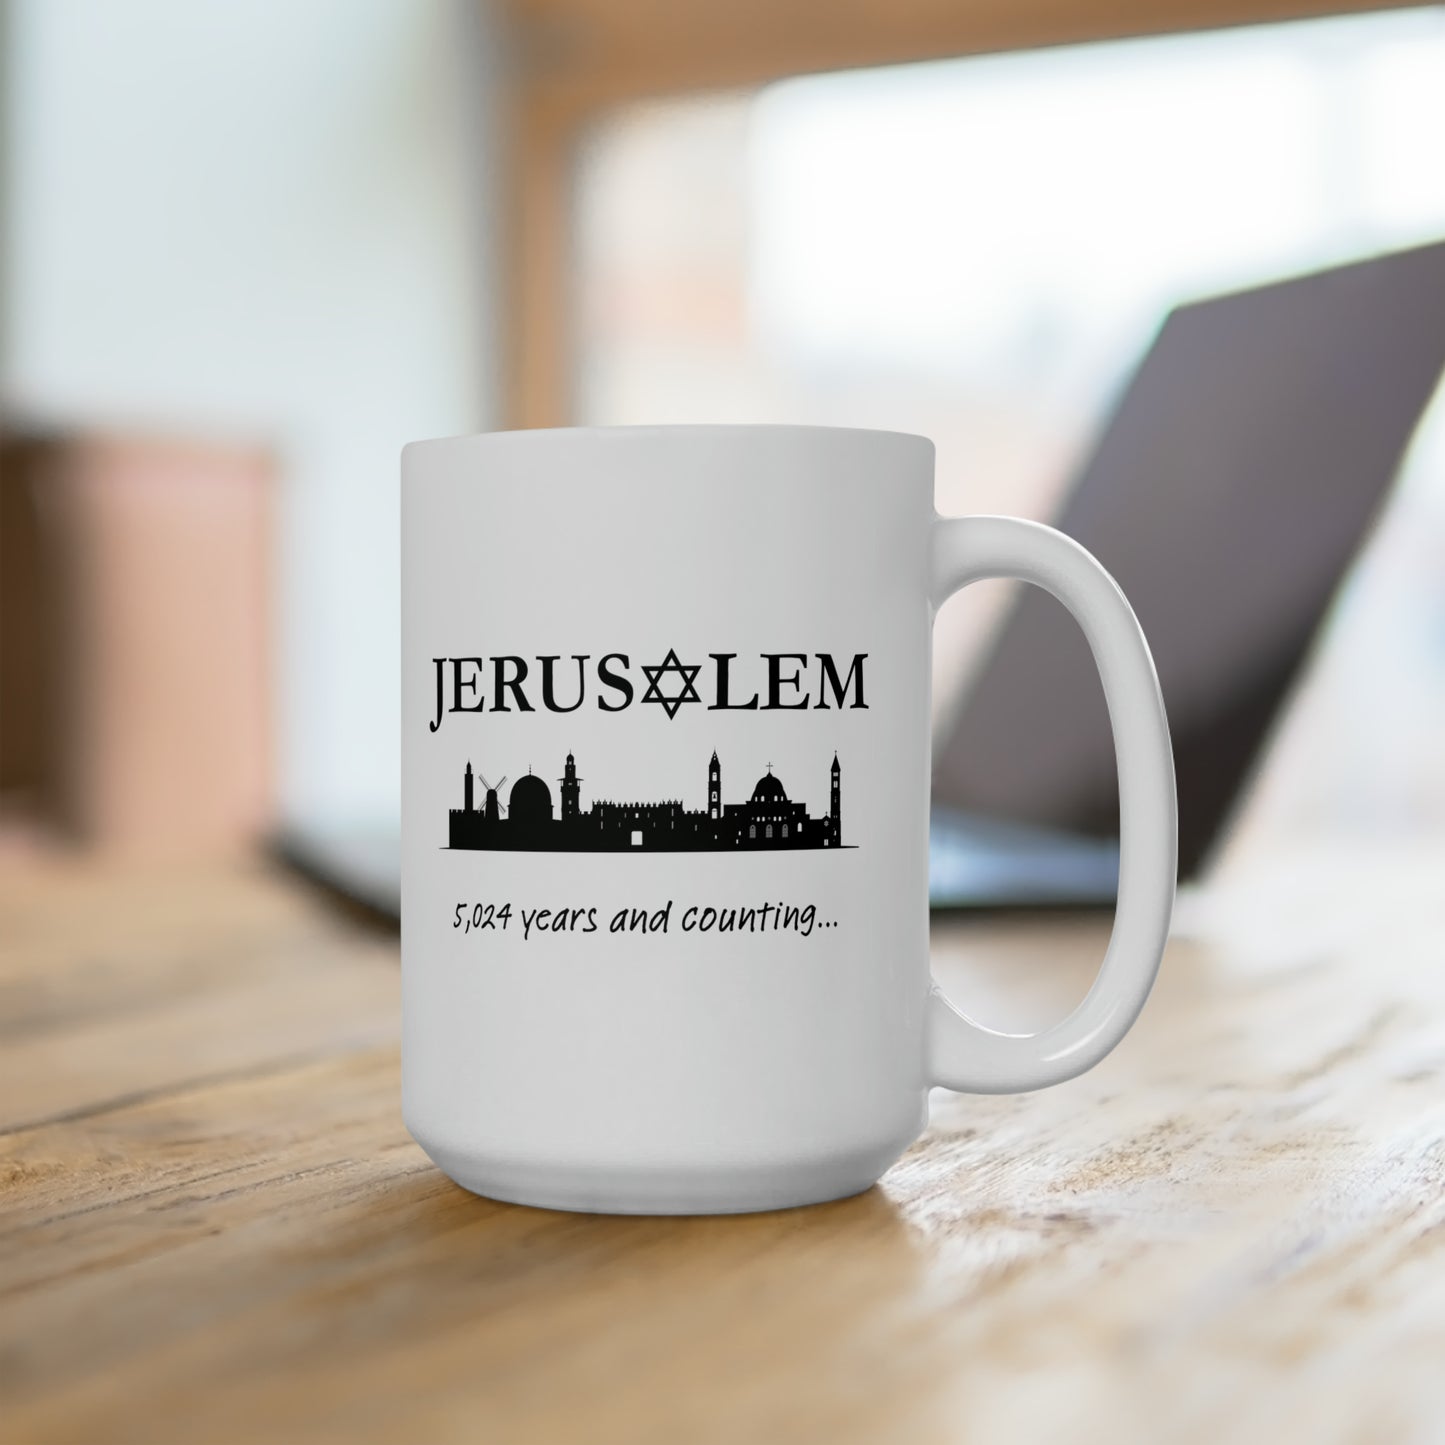 Jerusalem - 5,024 Years and Counting... Ceramic Mug, 15oz